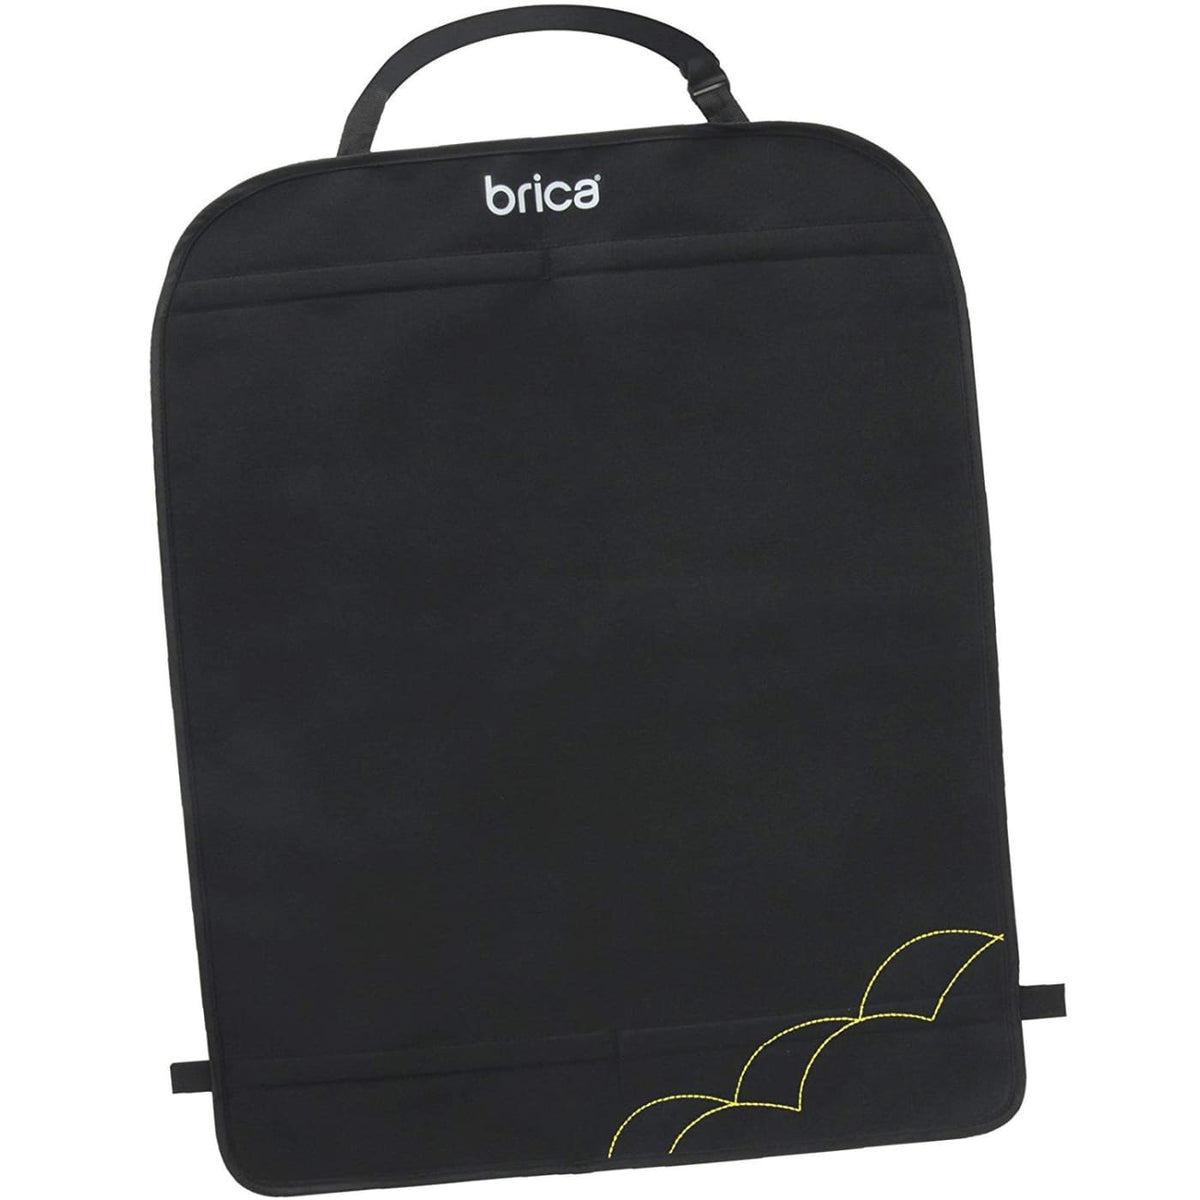 Brica Kick Mats - Black - Black - CAR SEATS - SEAT PROTECTORS/MIRRORS/STORAGE